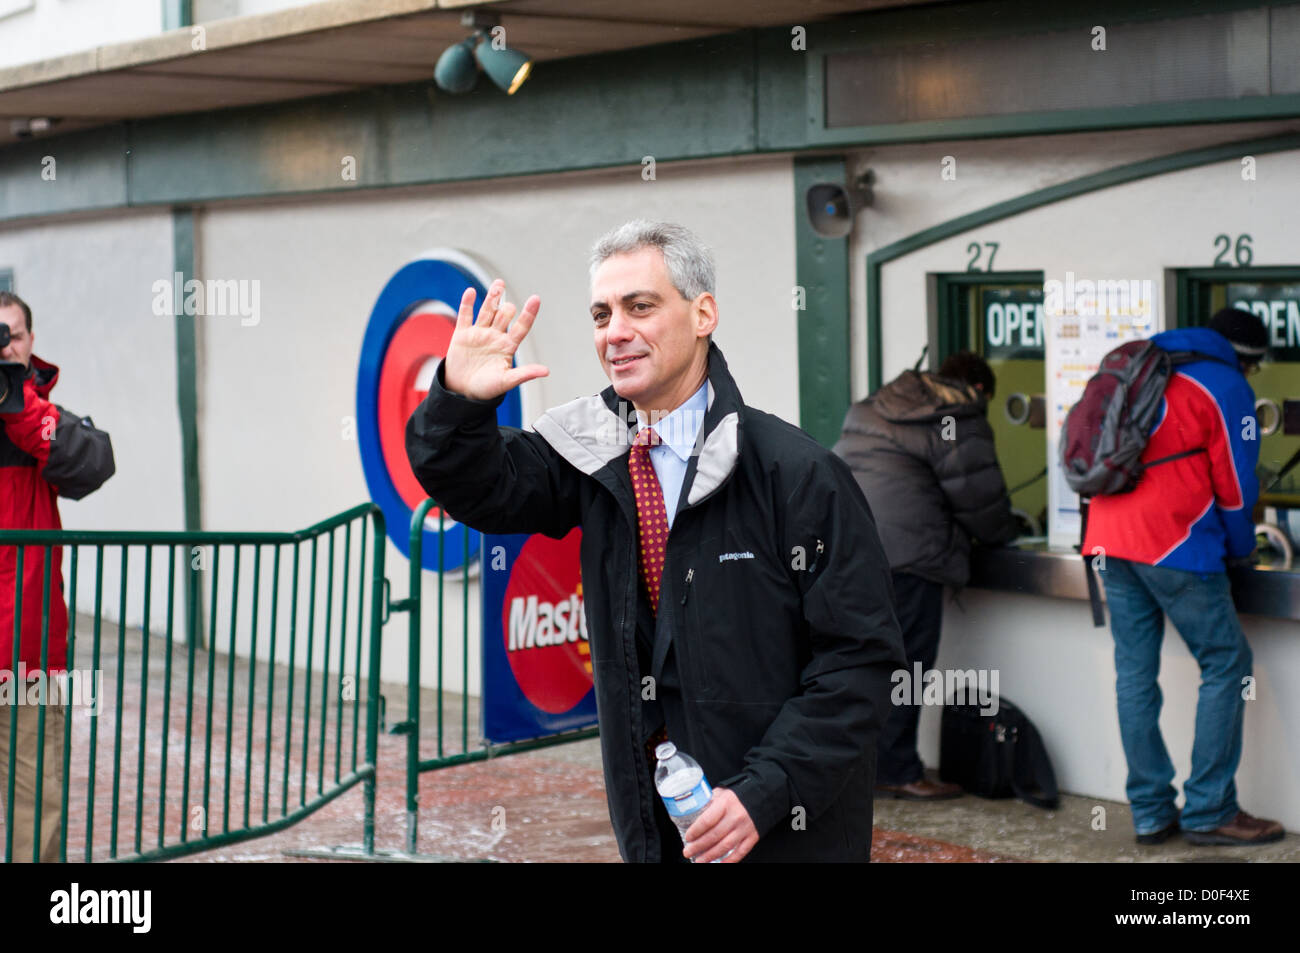 Mayor Rahm Emanuel walking outside Wrigley Field in Chicago, Illinois. MAX HERMAN/ALAMY Stock Photo